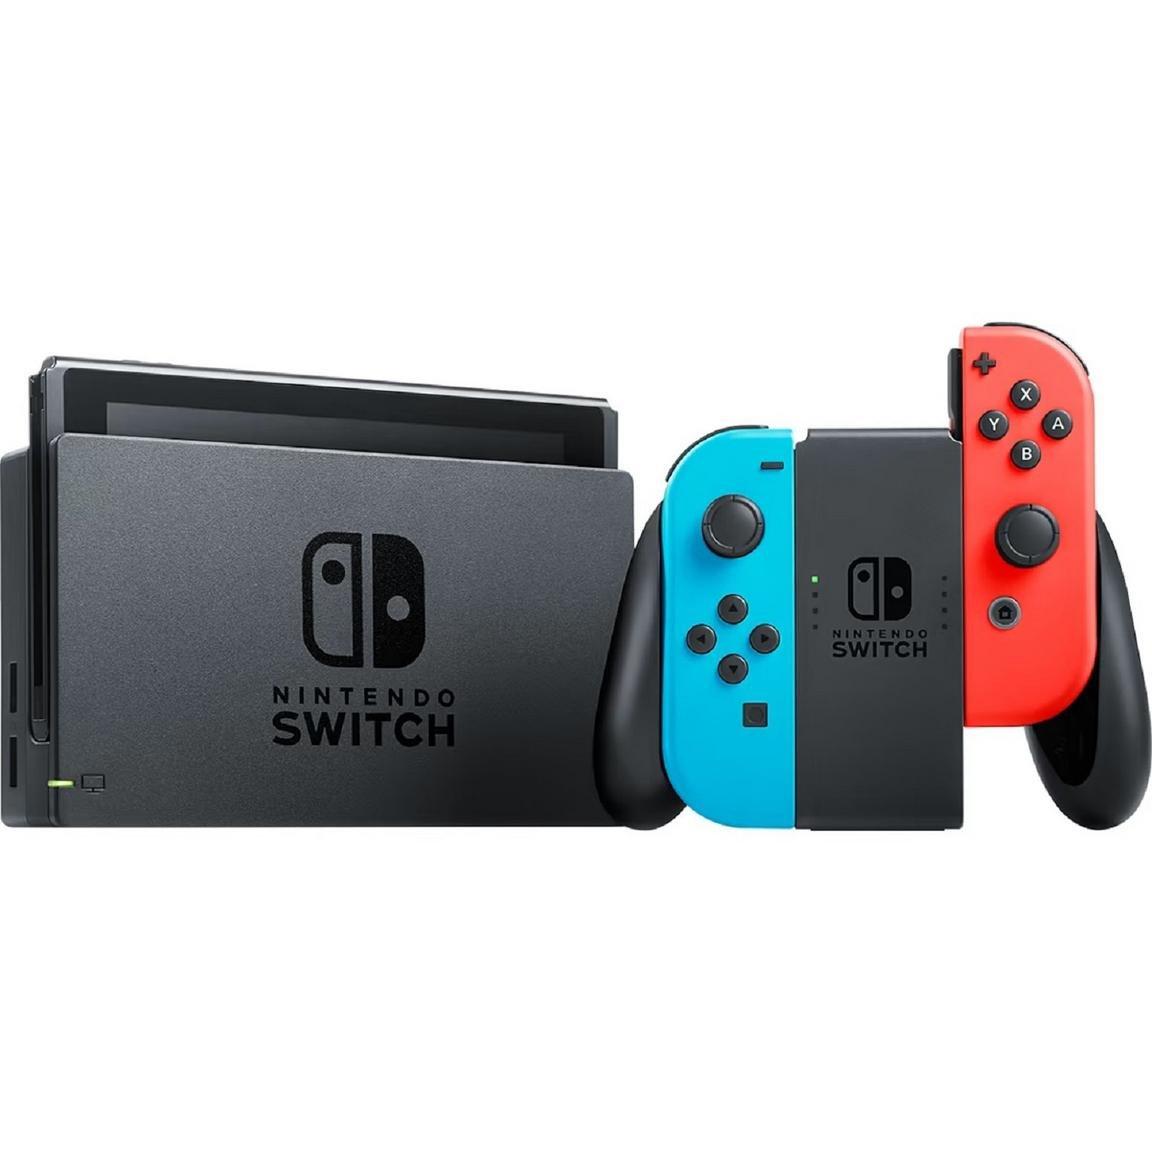 Nintendo Switch with Joy-Con Controller | GameStop